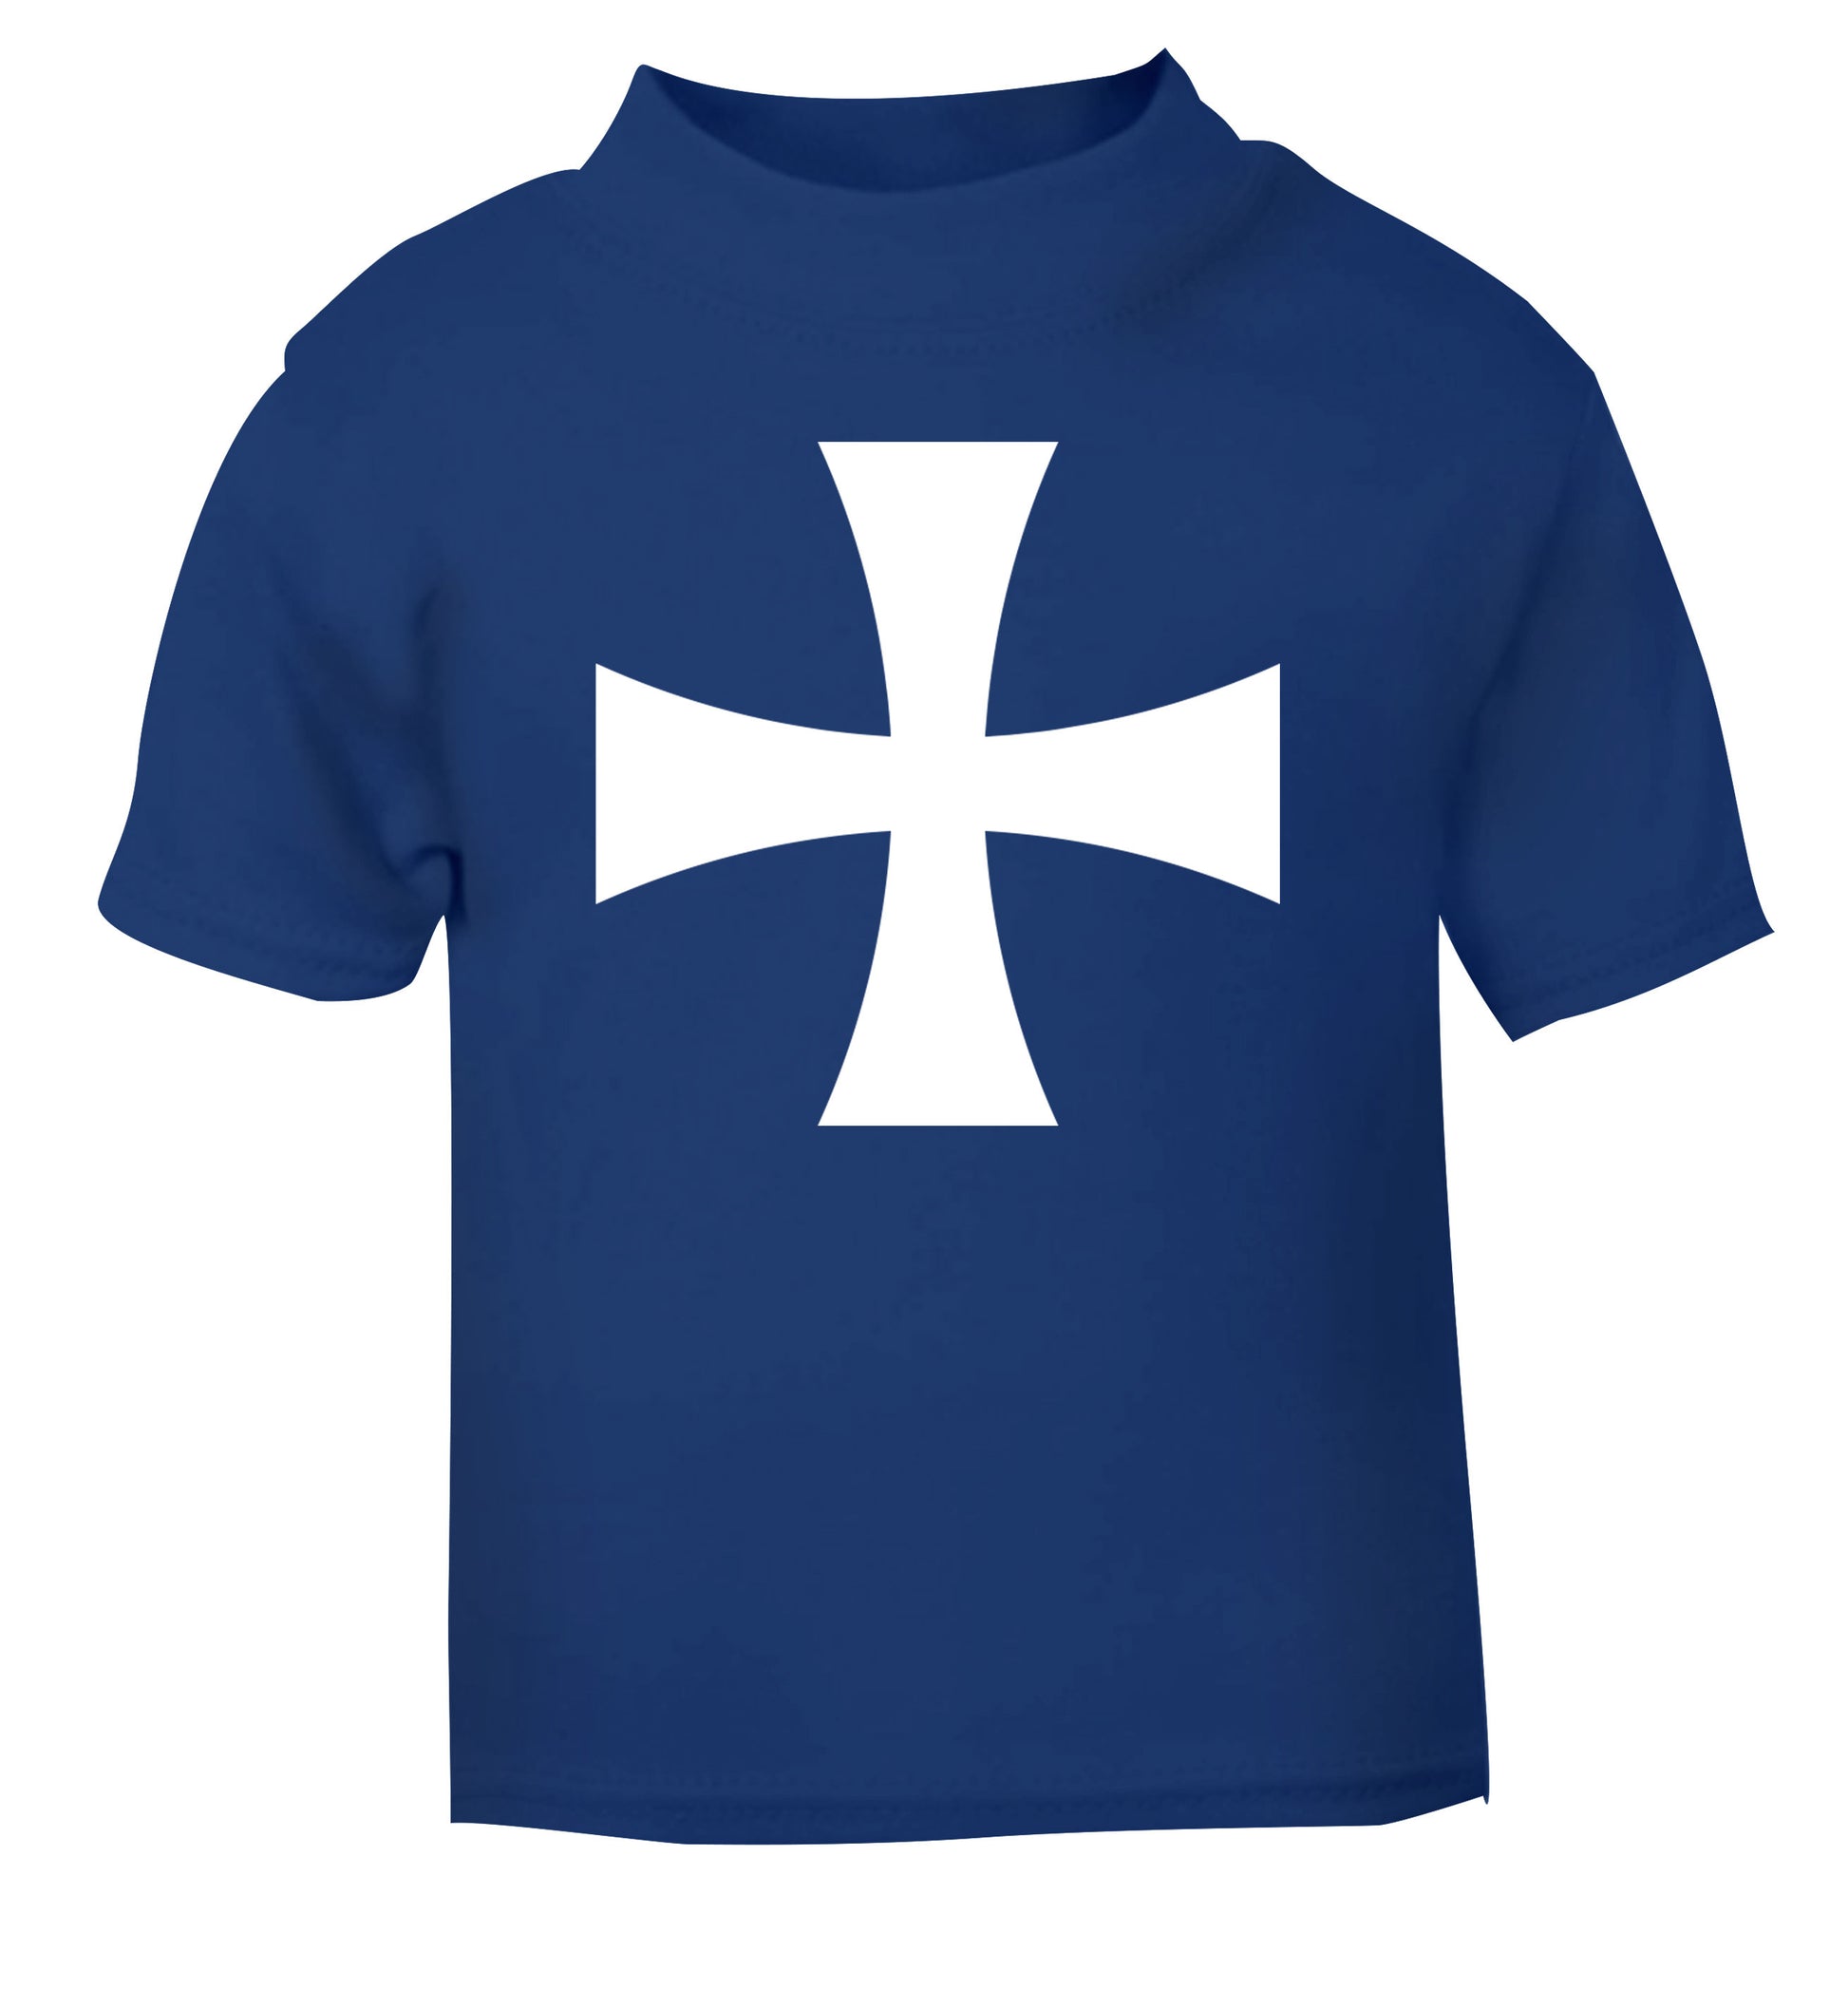 Knights Templar cross blue Baby Toddler Tshirt 2 Years